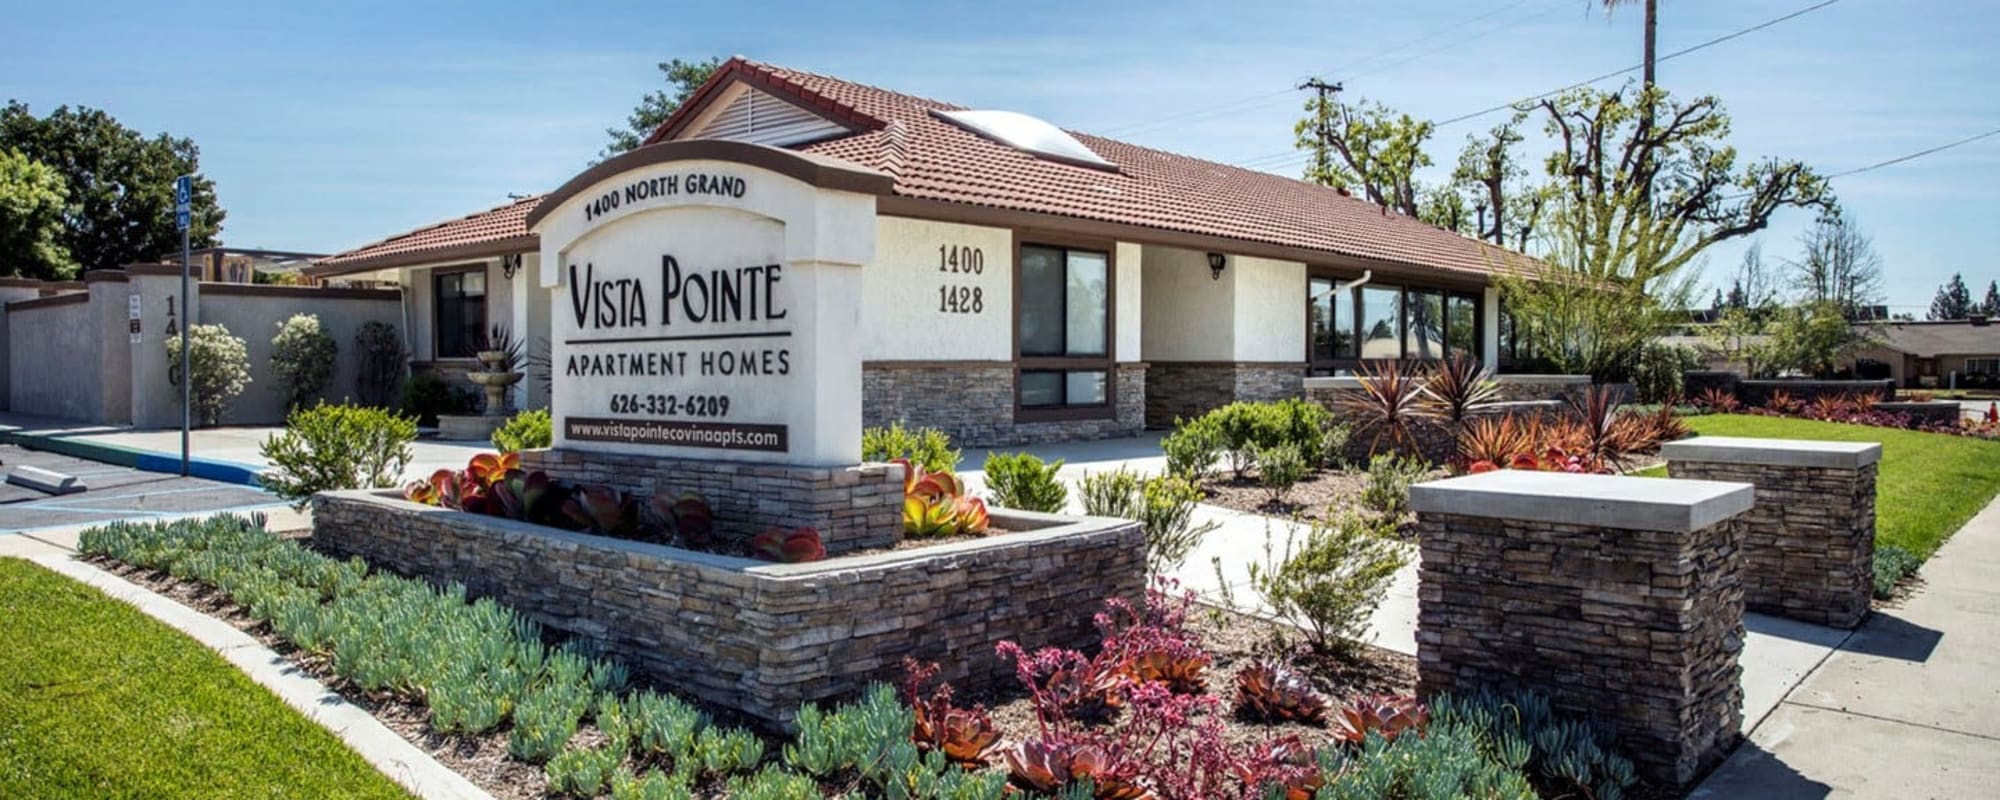 Apartments at Vista Pointe in Covina, California